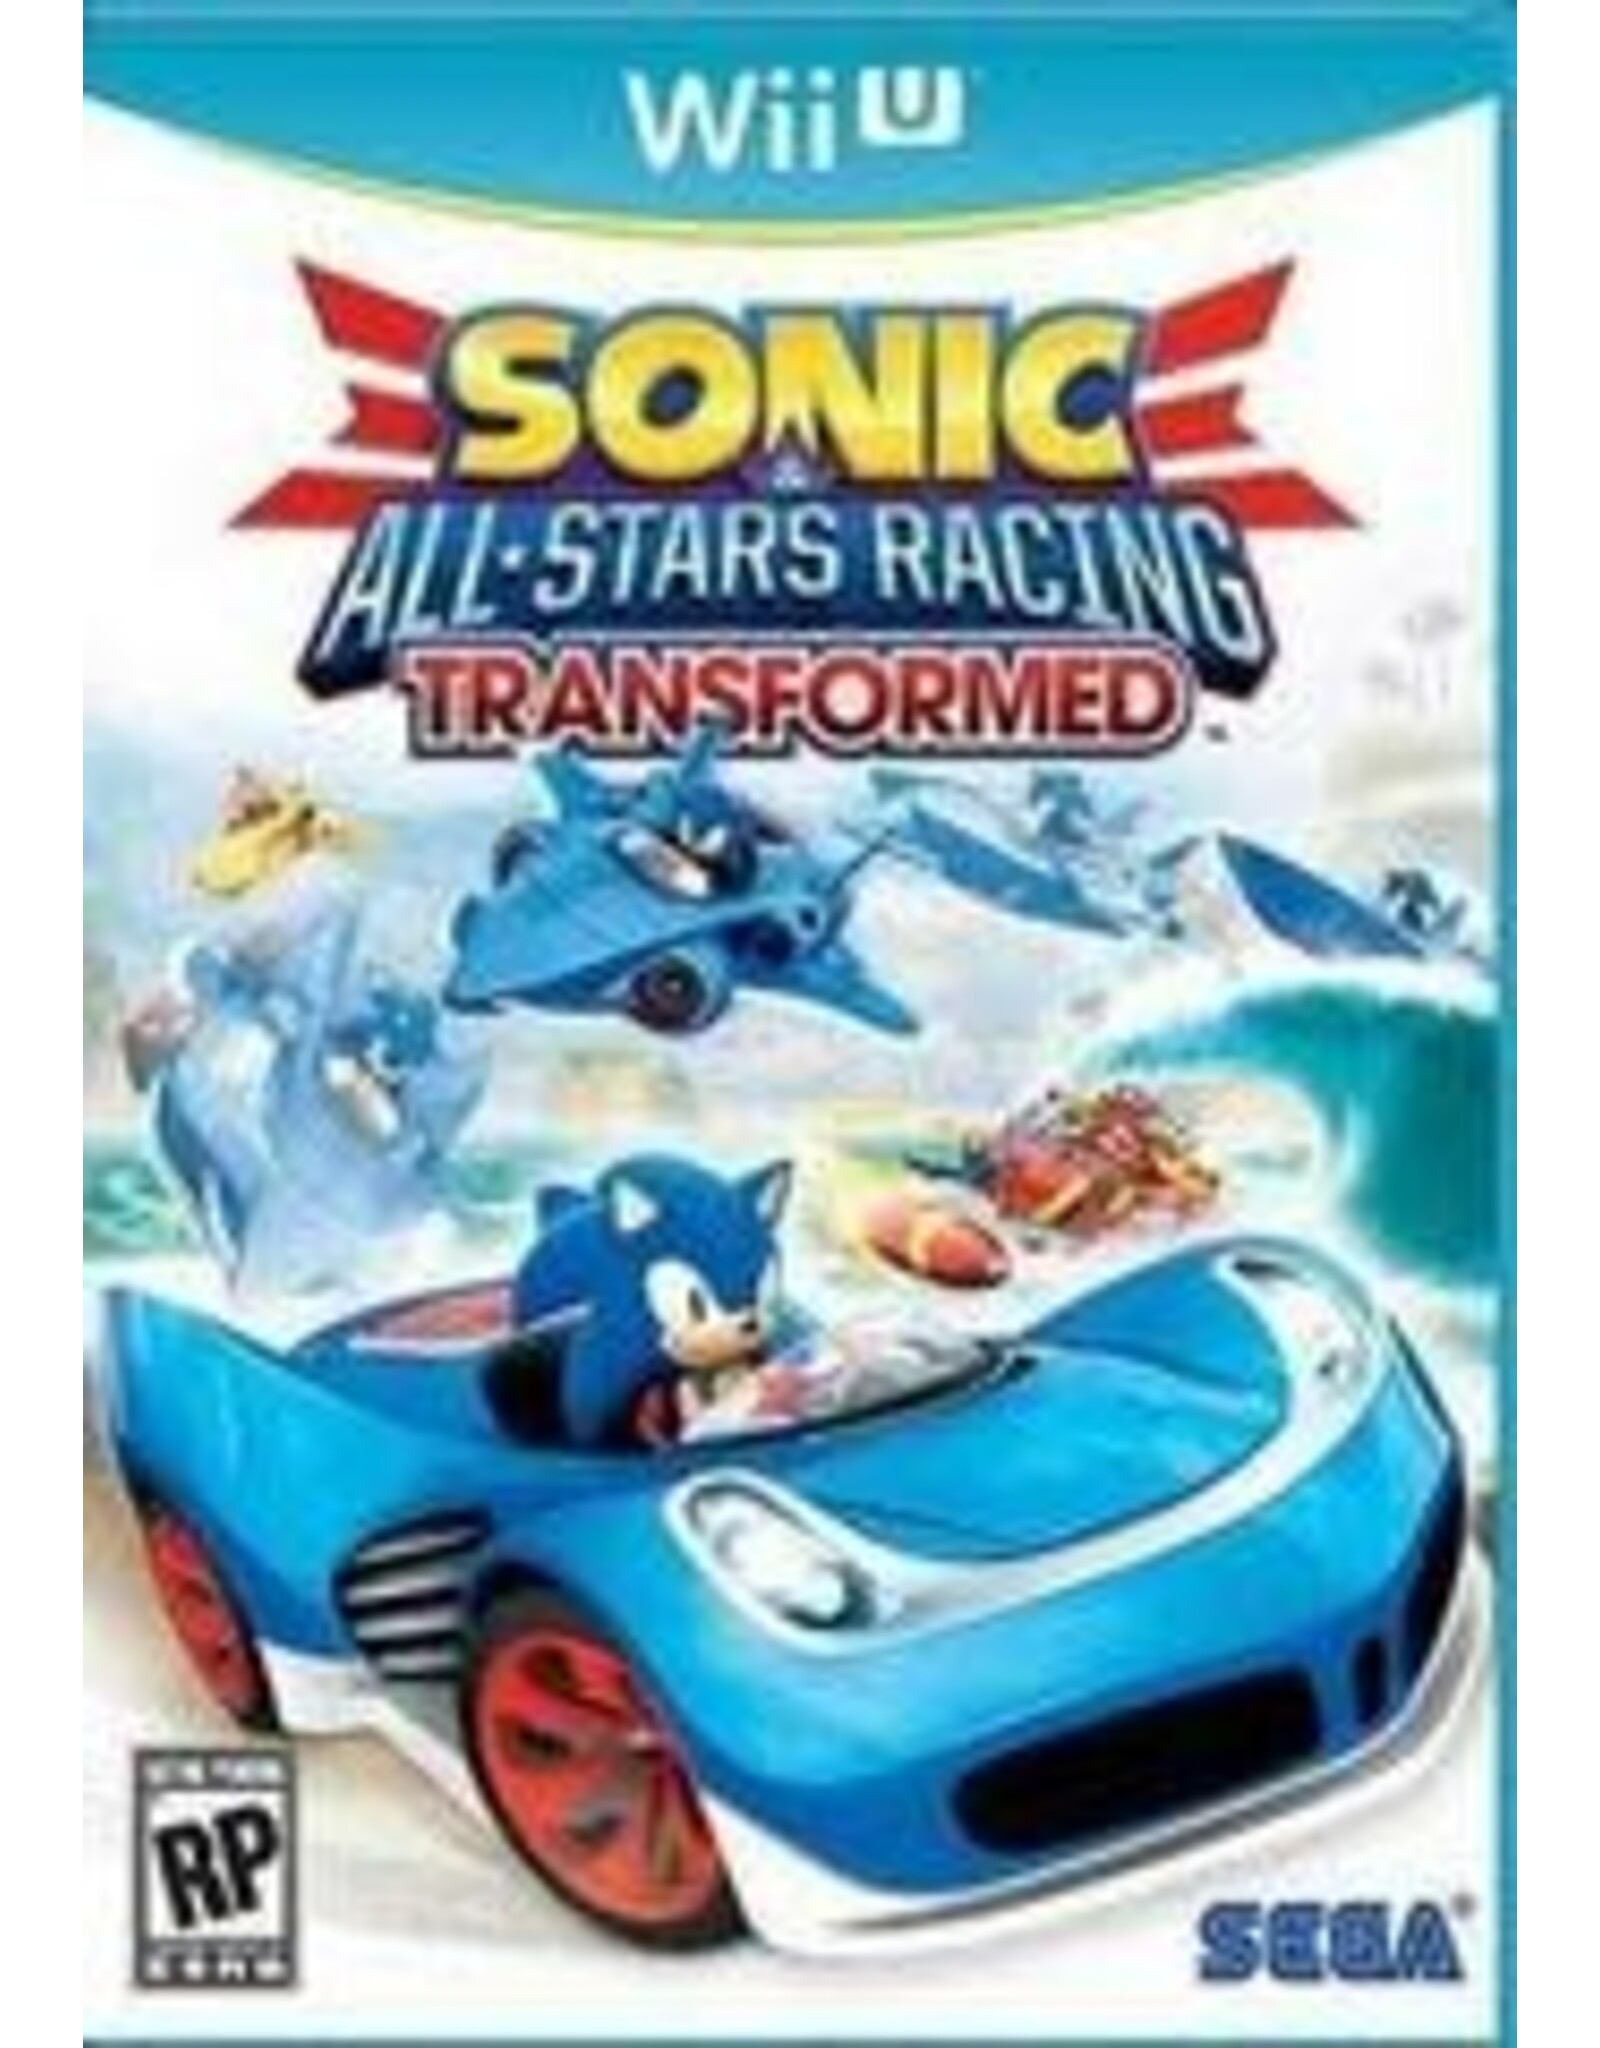 Wii U Sonic & All-Stars Racing Transformed Bonus Edition (CiB)